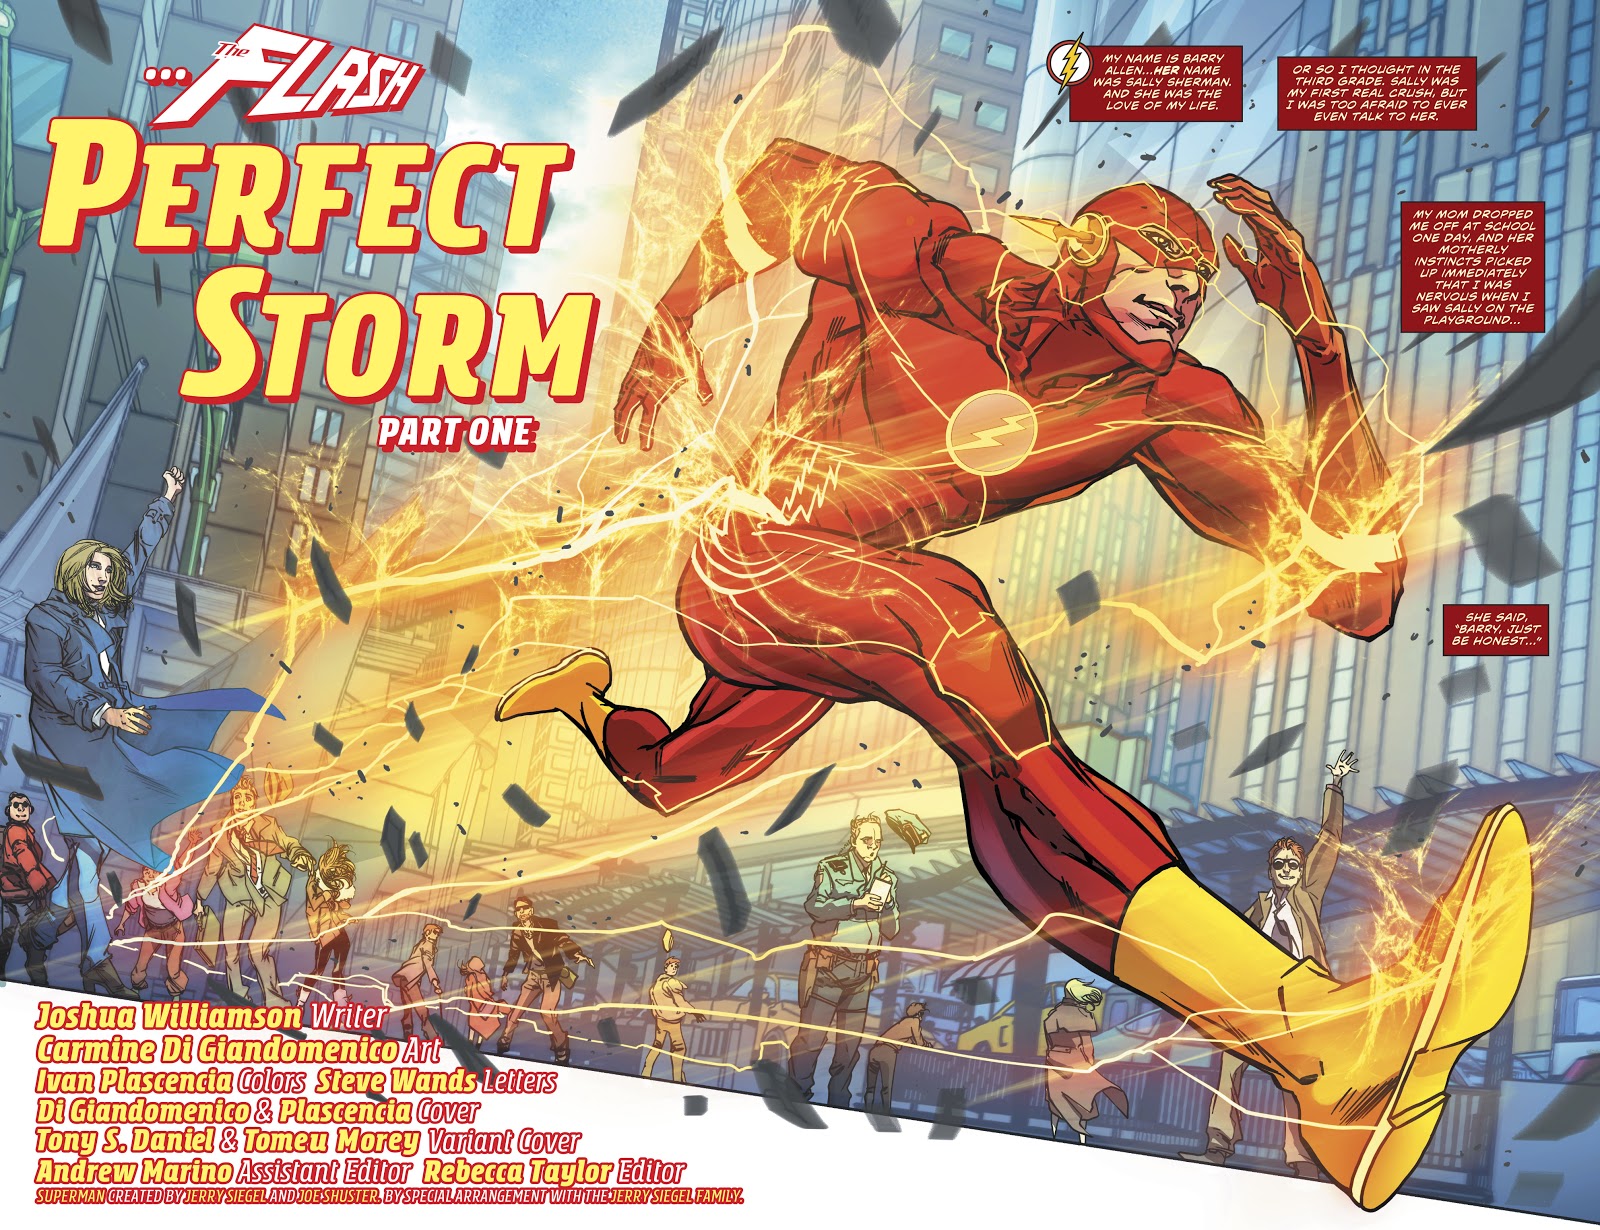 The Flash Vol. 5 #39